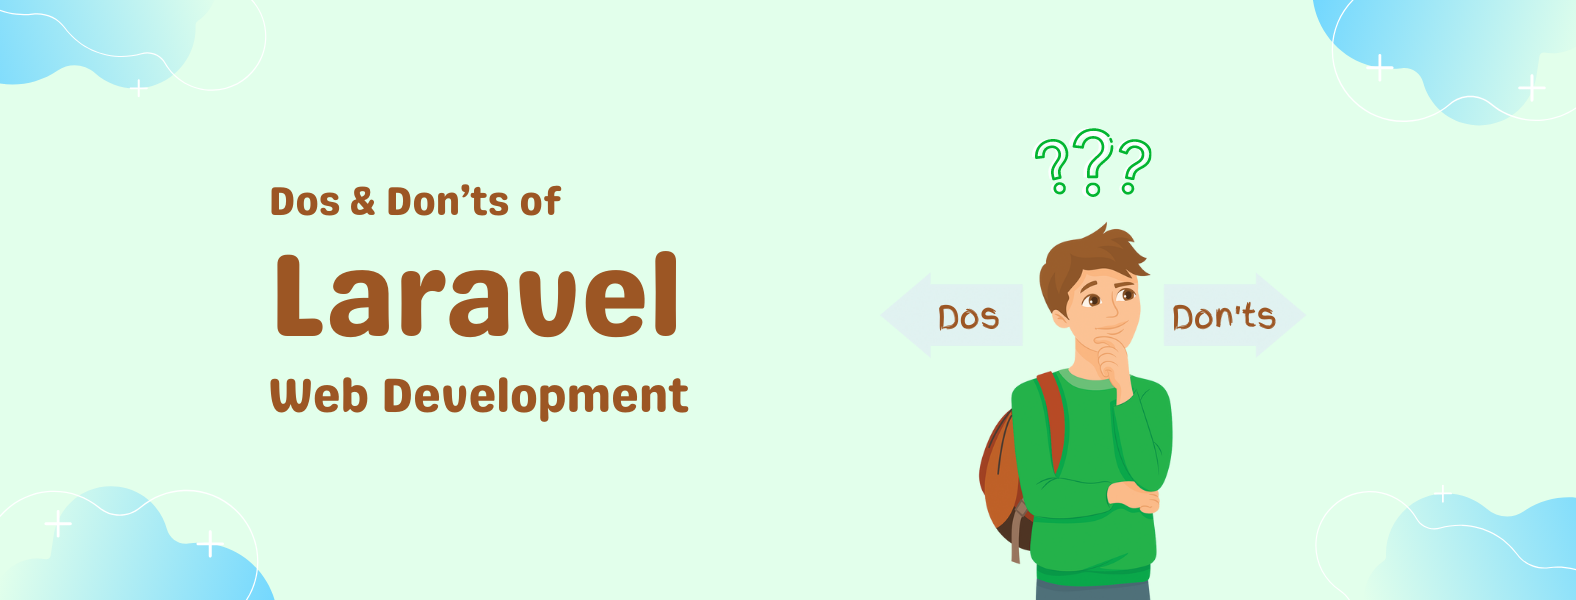 Some Dos & Don’ts of Laravel Web Application Development